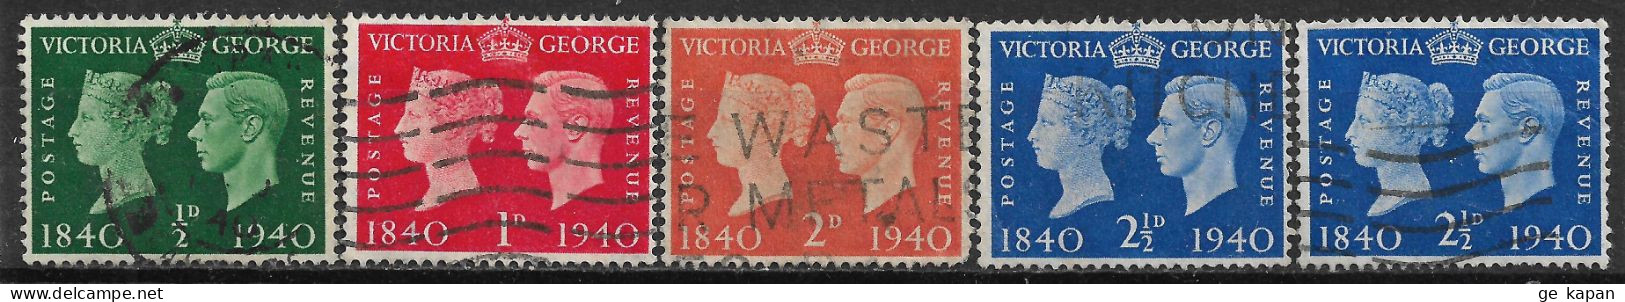 1940 GREAT BRITAIN Set Of 5 Used Stamps (Scott # 252,253,255,256) CV $2.60 - Usados